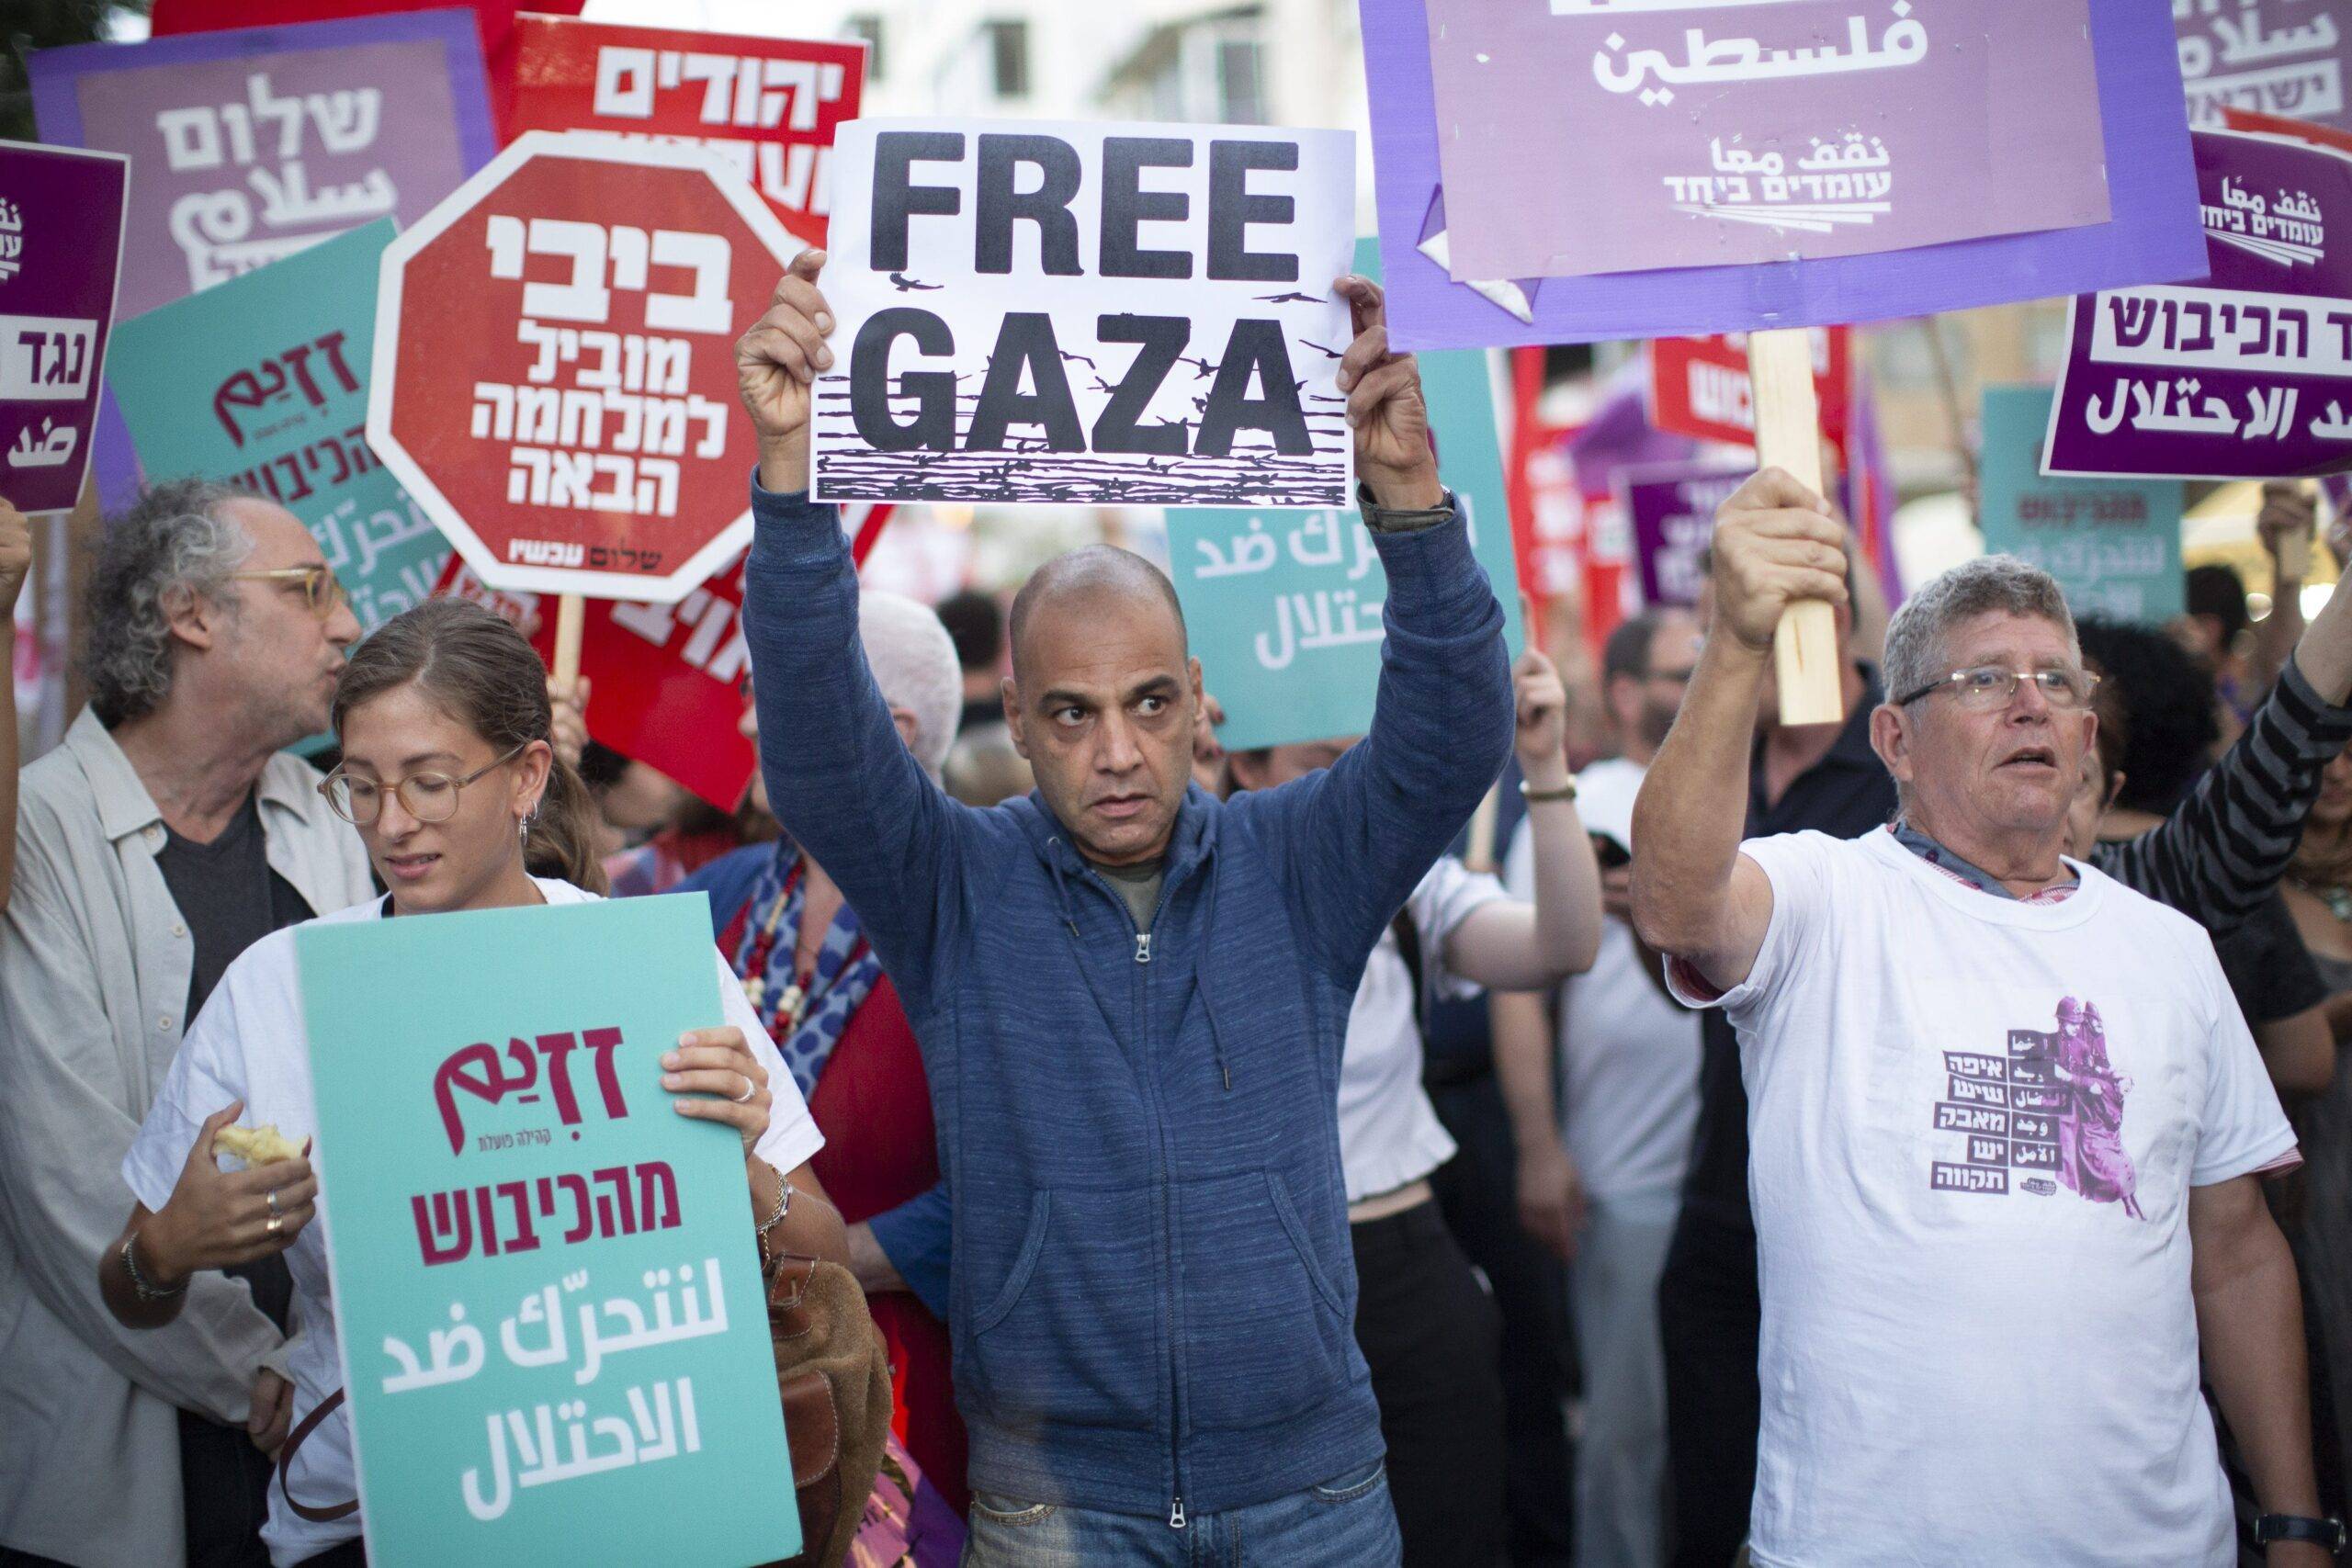 People attend a protest against Israeli violence in Gaza on 16 May, 2018 in Tel Aviv, Israel [Kobi Wolf/Anadolu Agency]